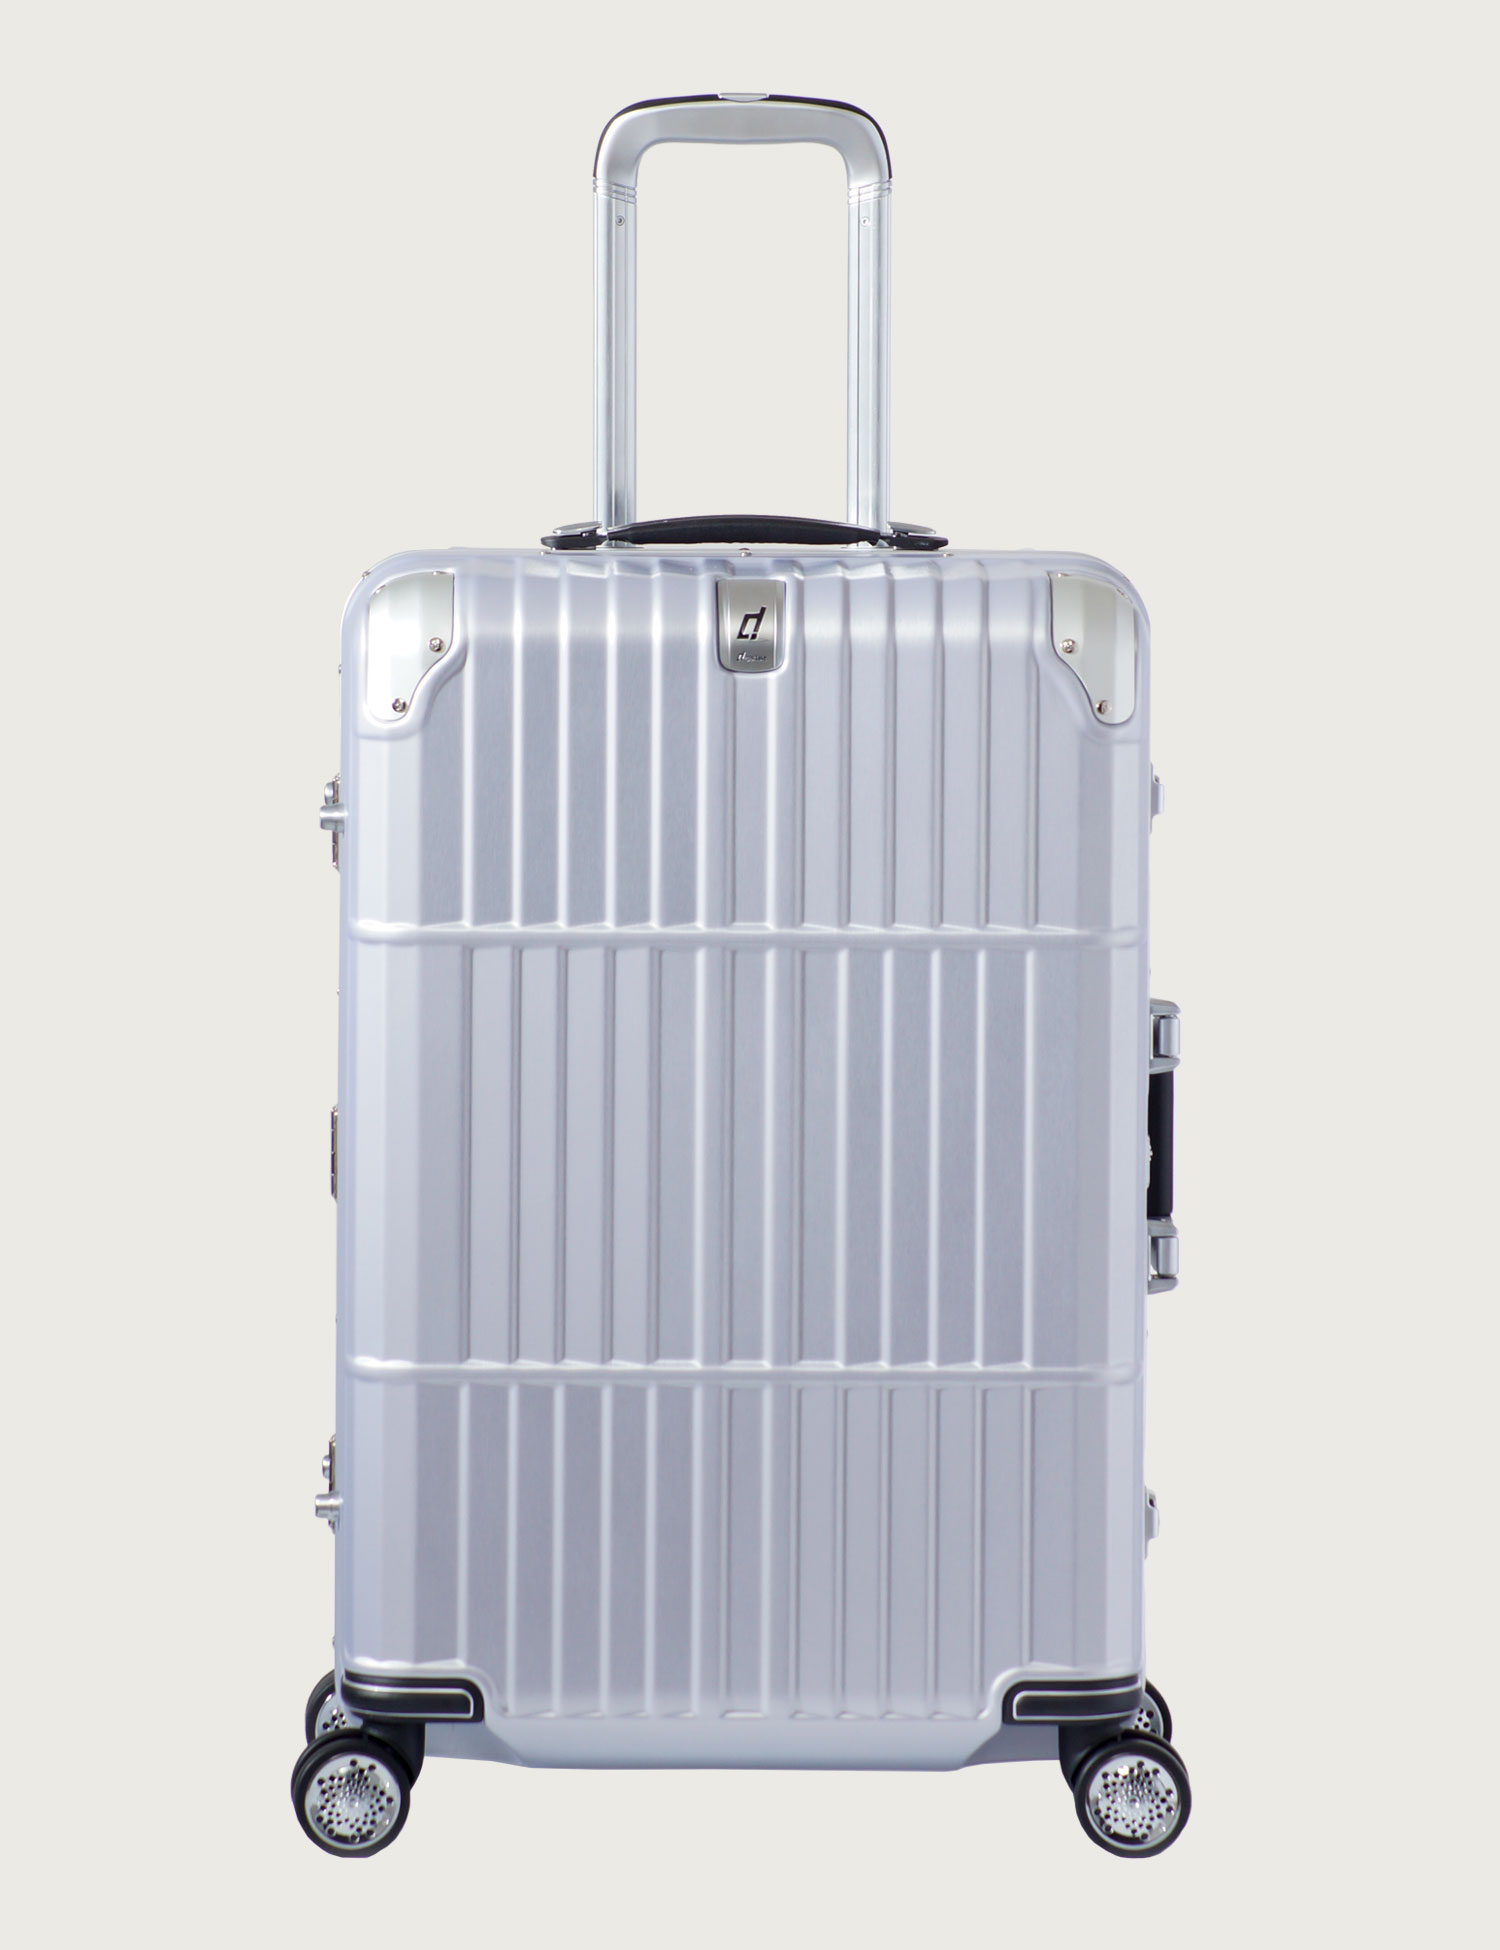 departure ディパーチャー アジア・ラゲージのスーツケース | アジア 